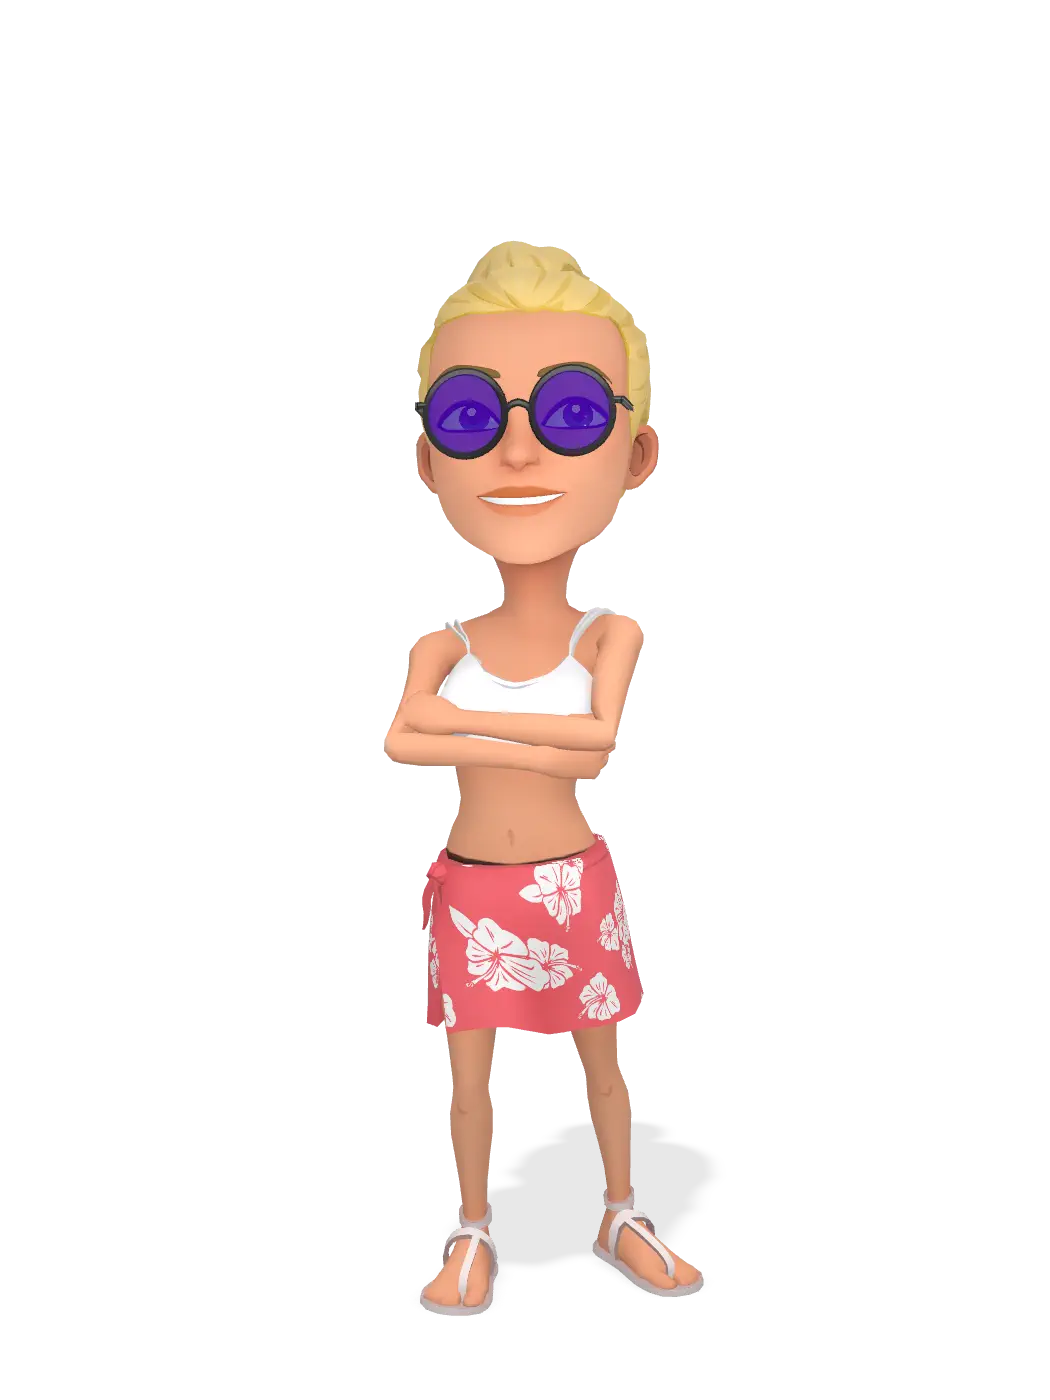 3D Bitmoji for childhoodfeed avatar